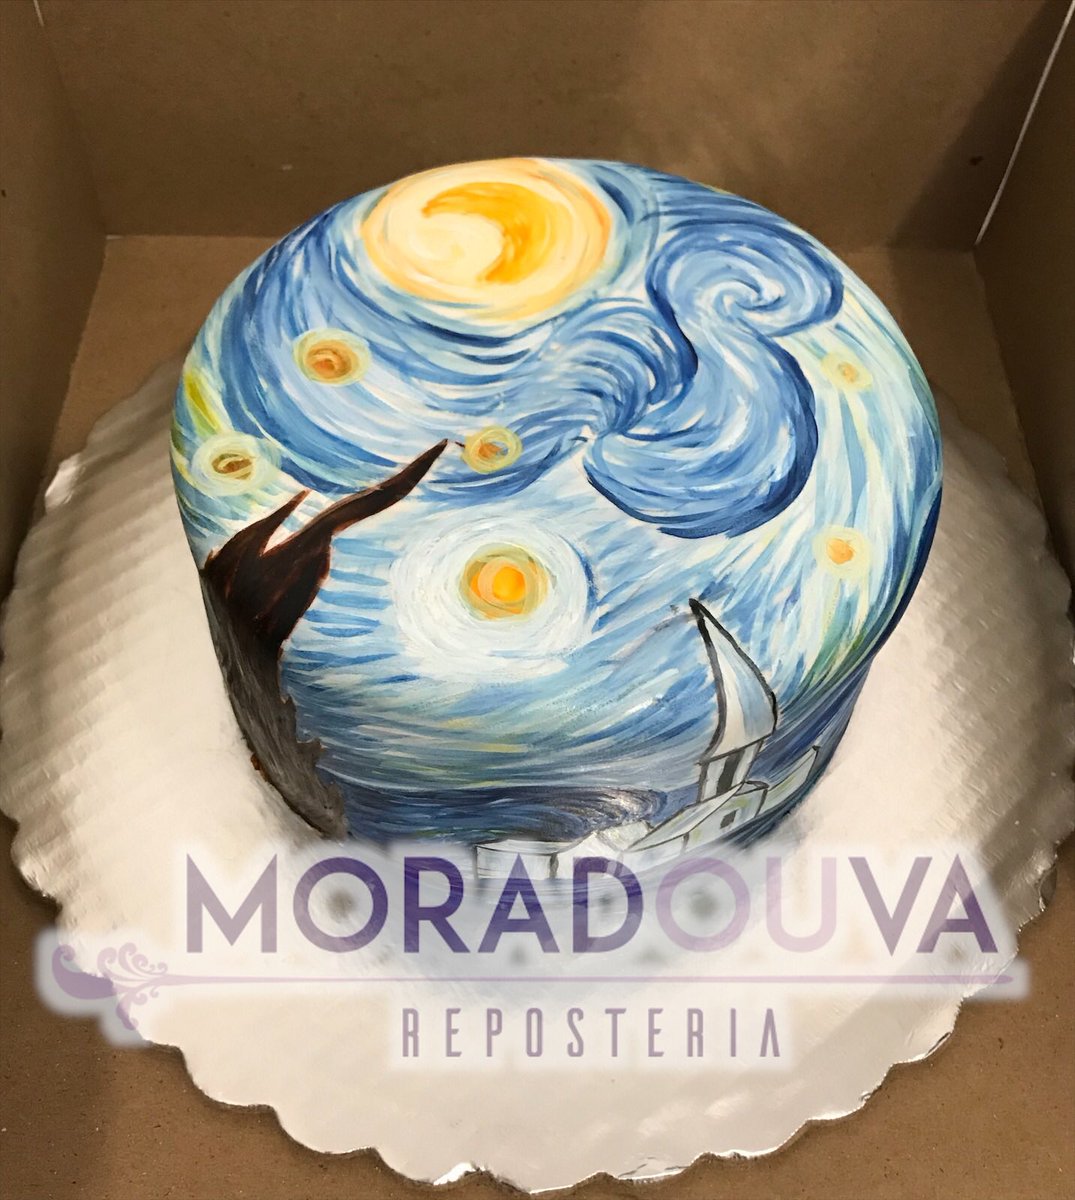 MoradoUva Repostería on Twitter: 